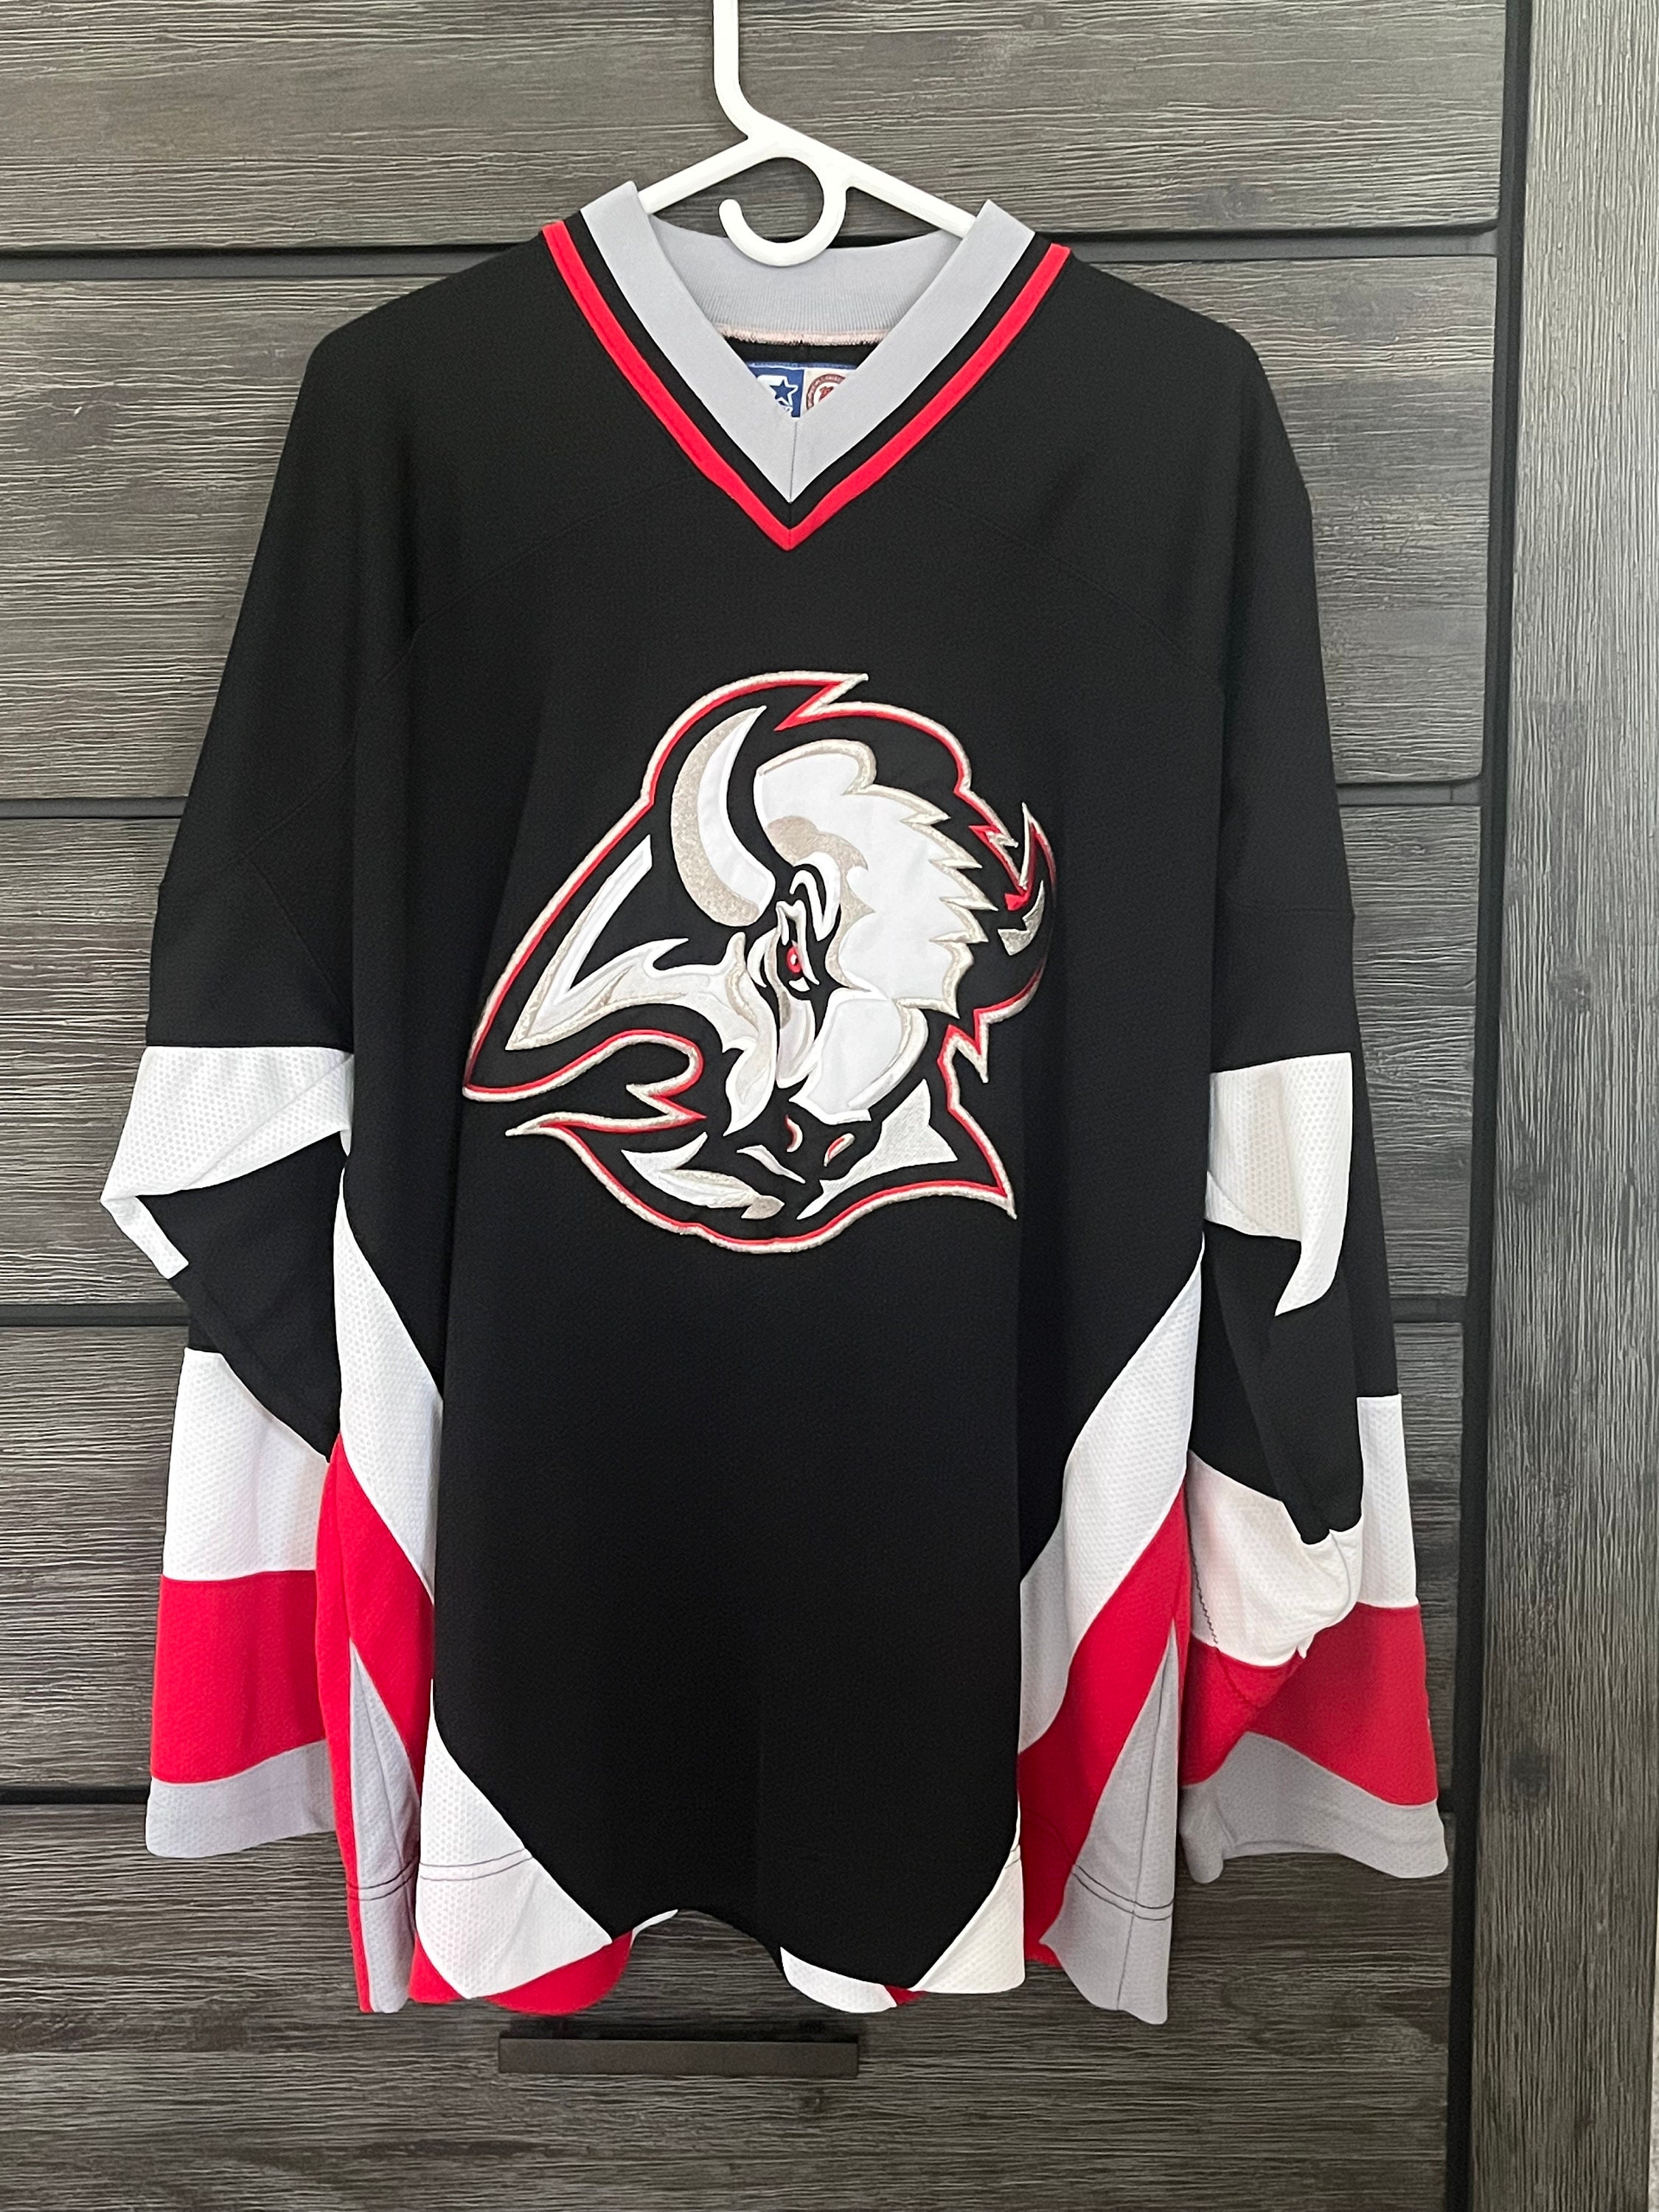 Buffalo Sabres to bring back popular 'Goathead' jerseys this season